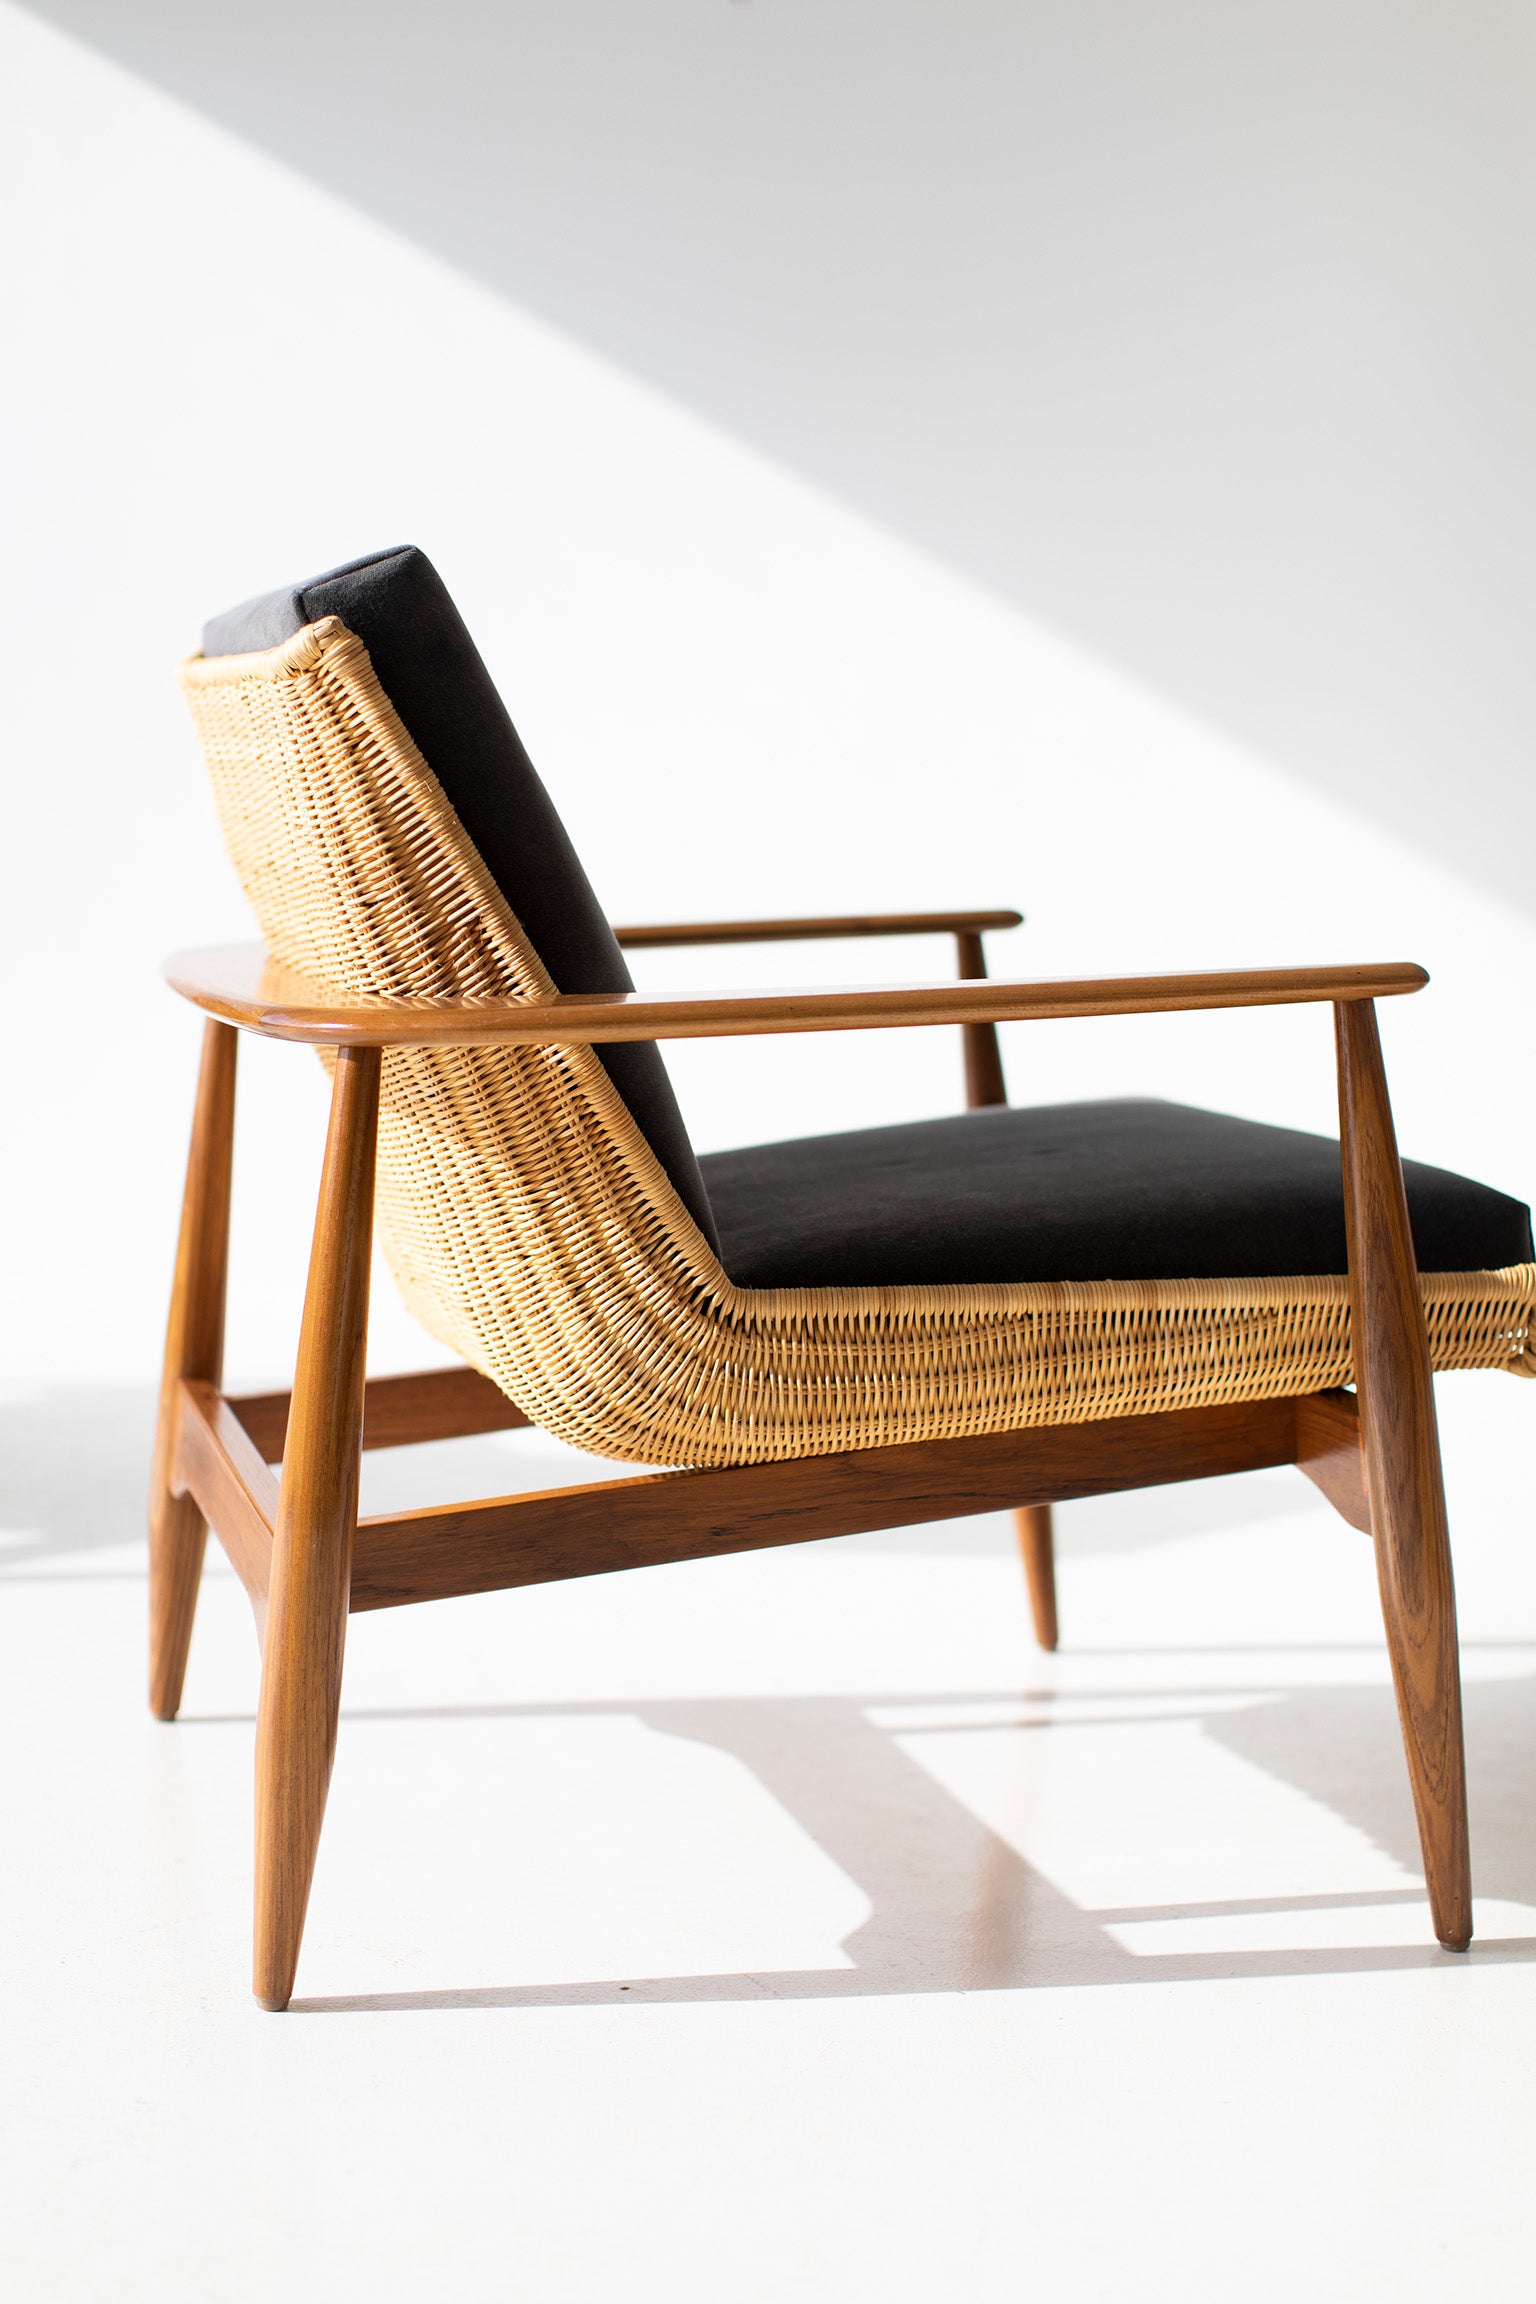      peabody-modern-wicker-lounge-chairs-1806P-05